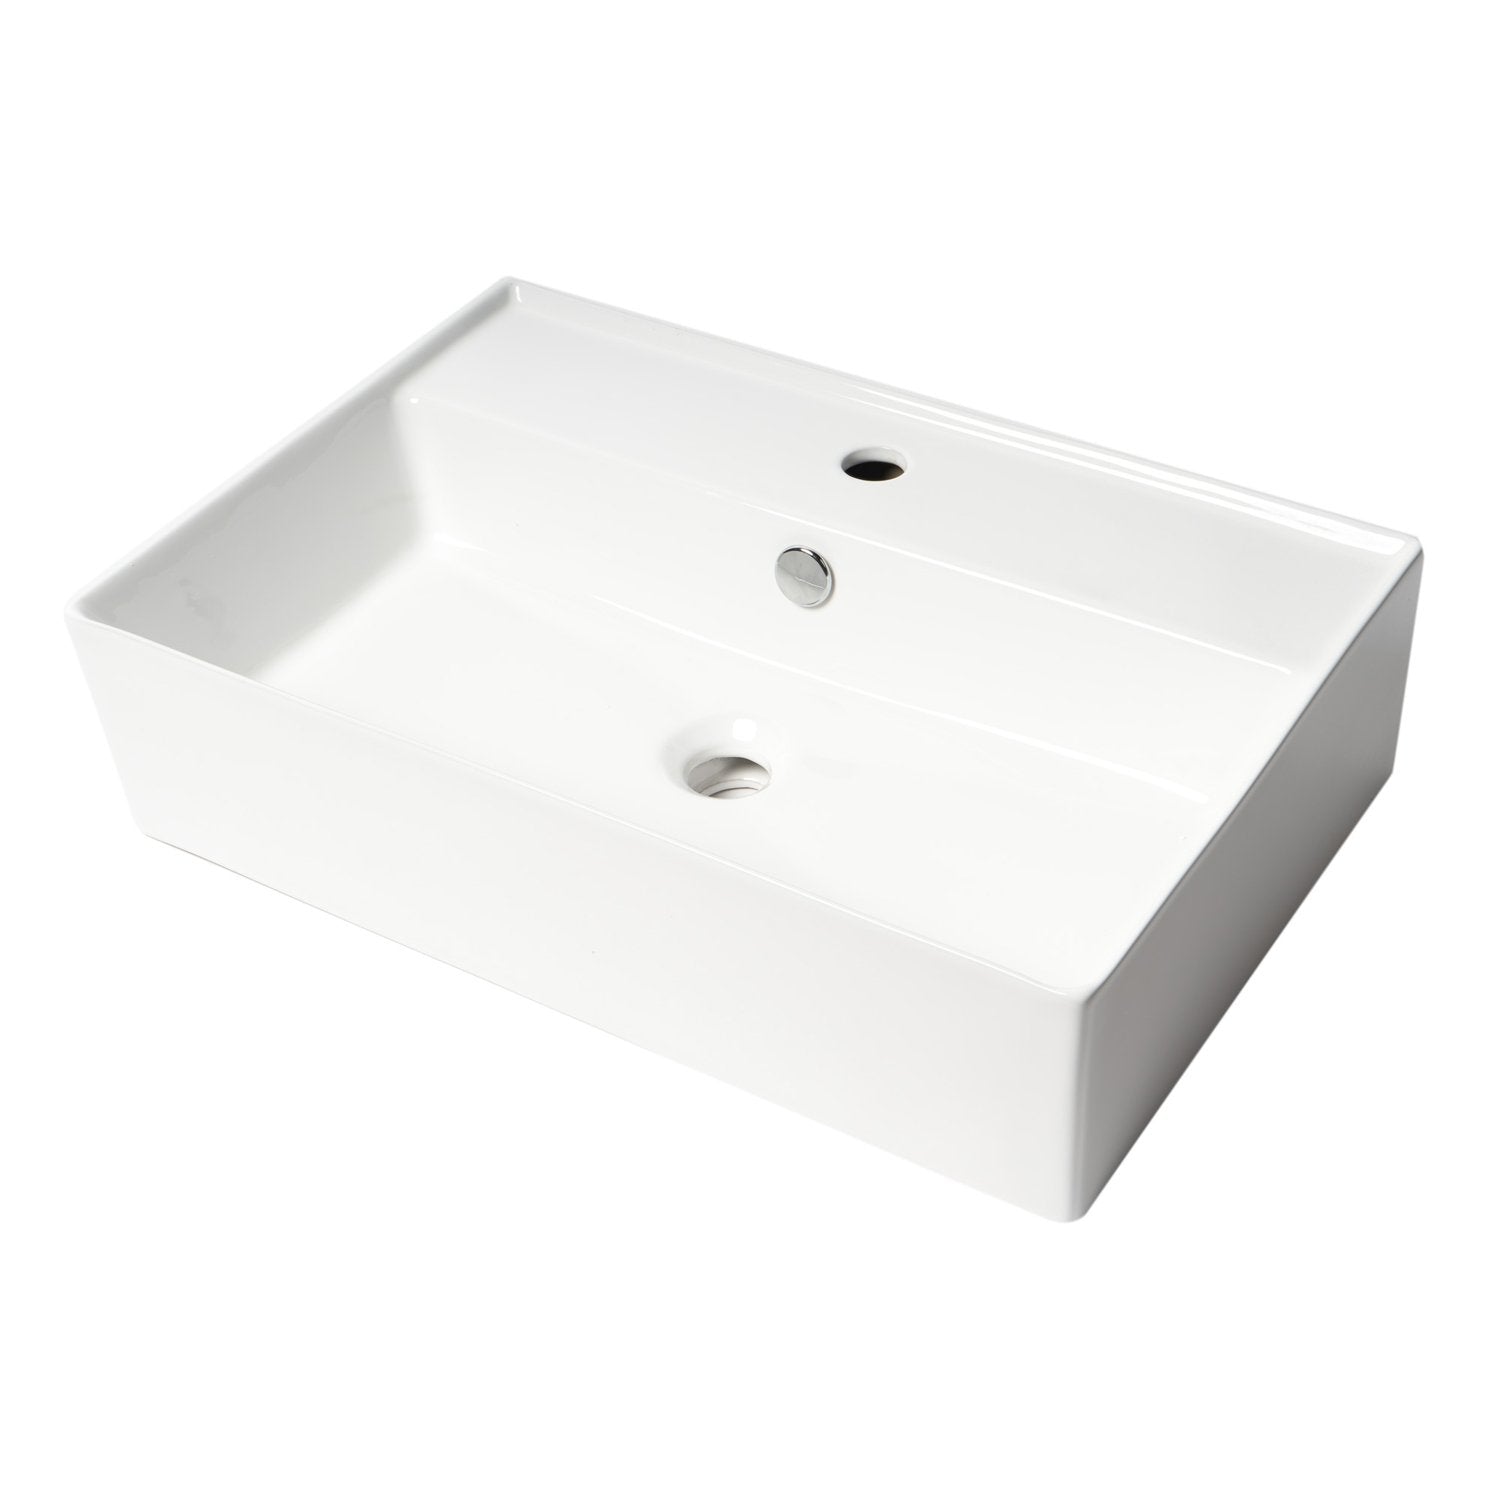 ALFI ABC901 24" Modern Rectangular Above Mount Ceramic Sink with Faucet Hole